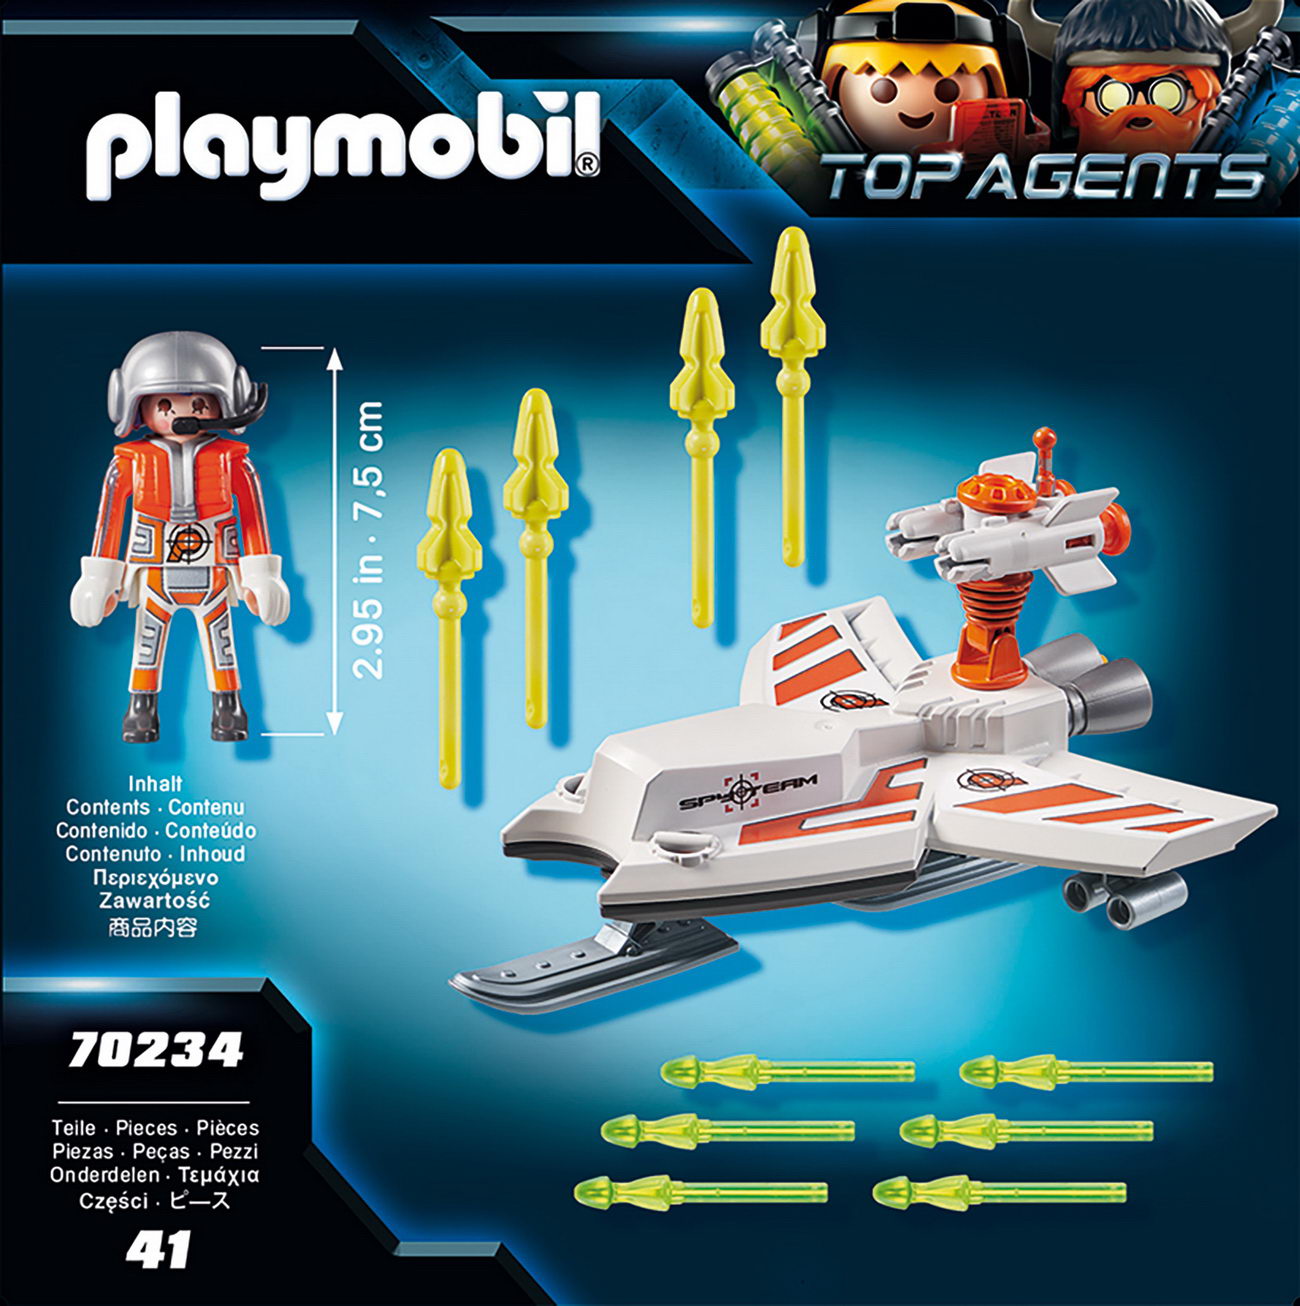 Playmobil 70234 - Spy Team Fluggleiter - Top Agents